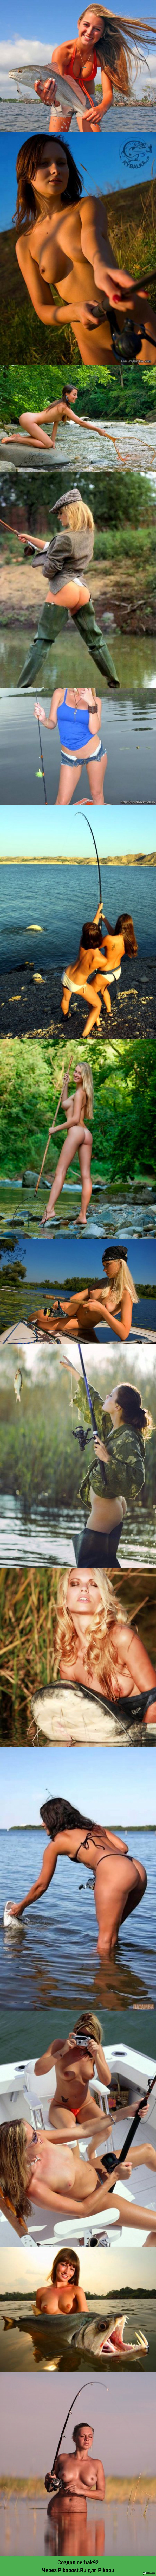 Take a girl fishing? why not! Ch 2 - NSFW, Girls, Boobs, Fishing, Fishing rod, Strawberry, Longpost